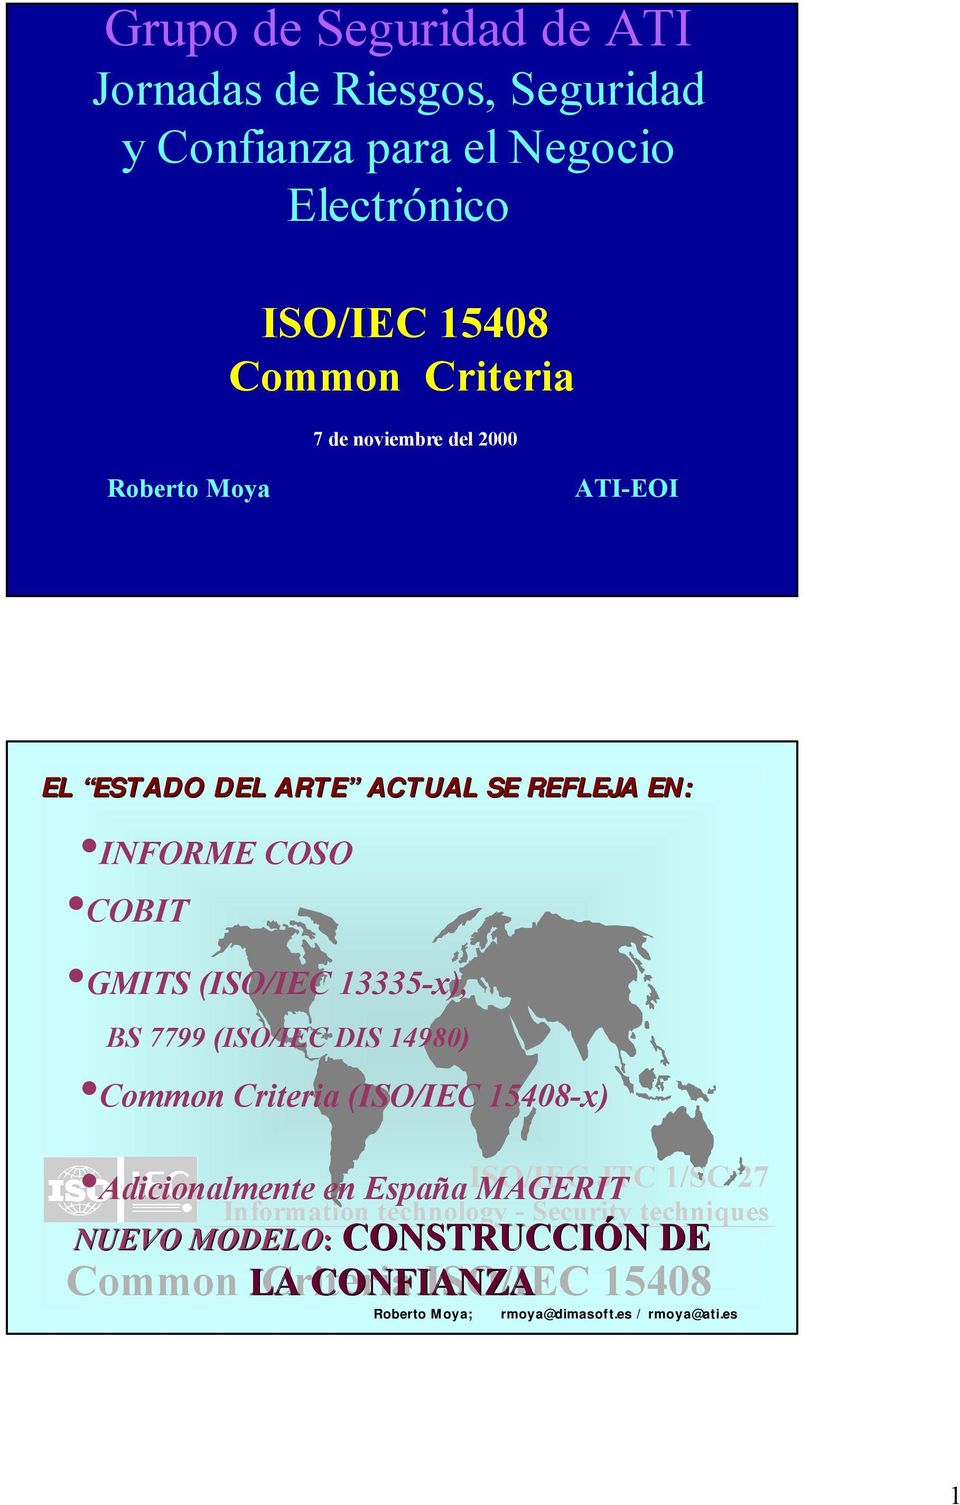 13335-x), BS 7799 (ISO/IEC DIS 14980) Common Criteria (ISO/IEC 15408-x) Adicionalmente en España ISO/IEC MAGERIT JTC 1/SC 27